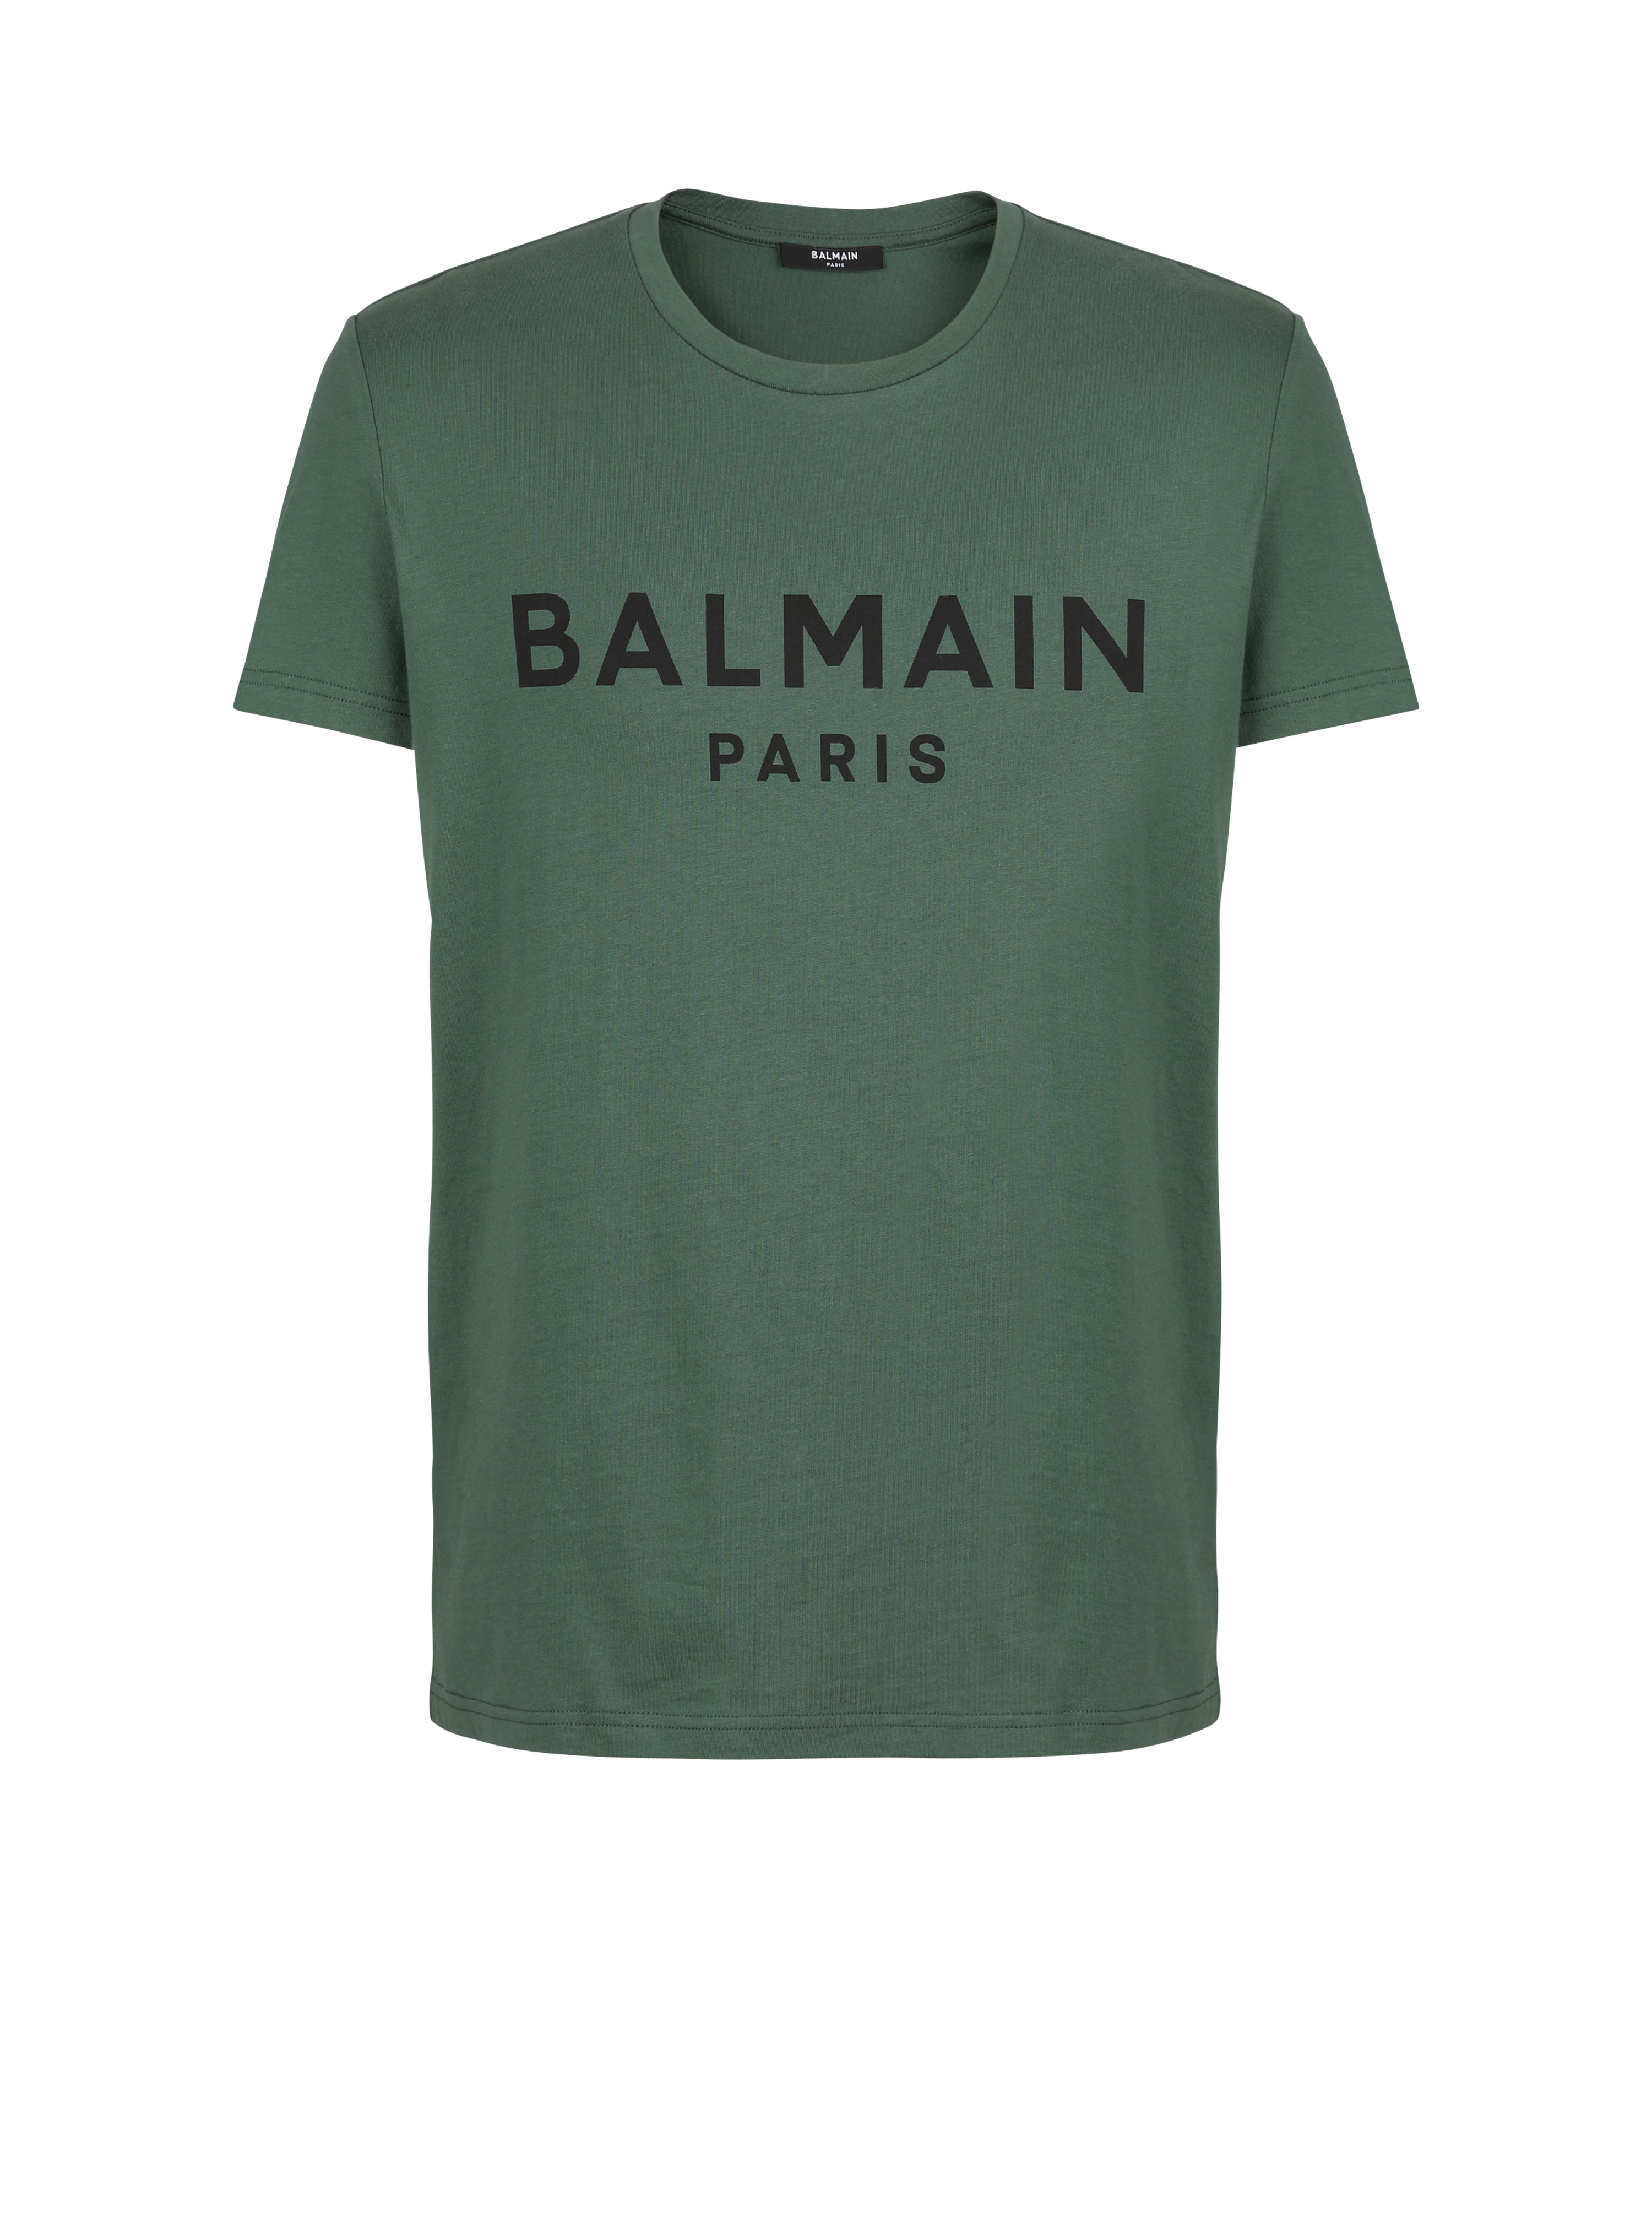 Eco-designed cotton T-shirt with Balmain Paris logo print, green